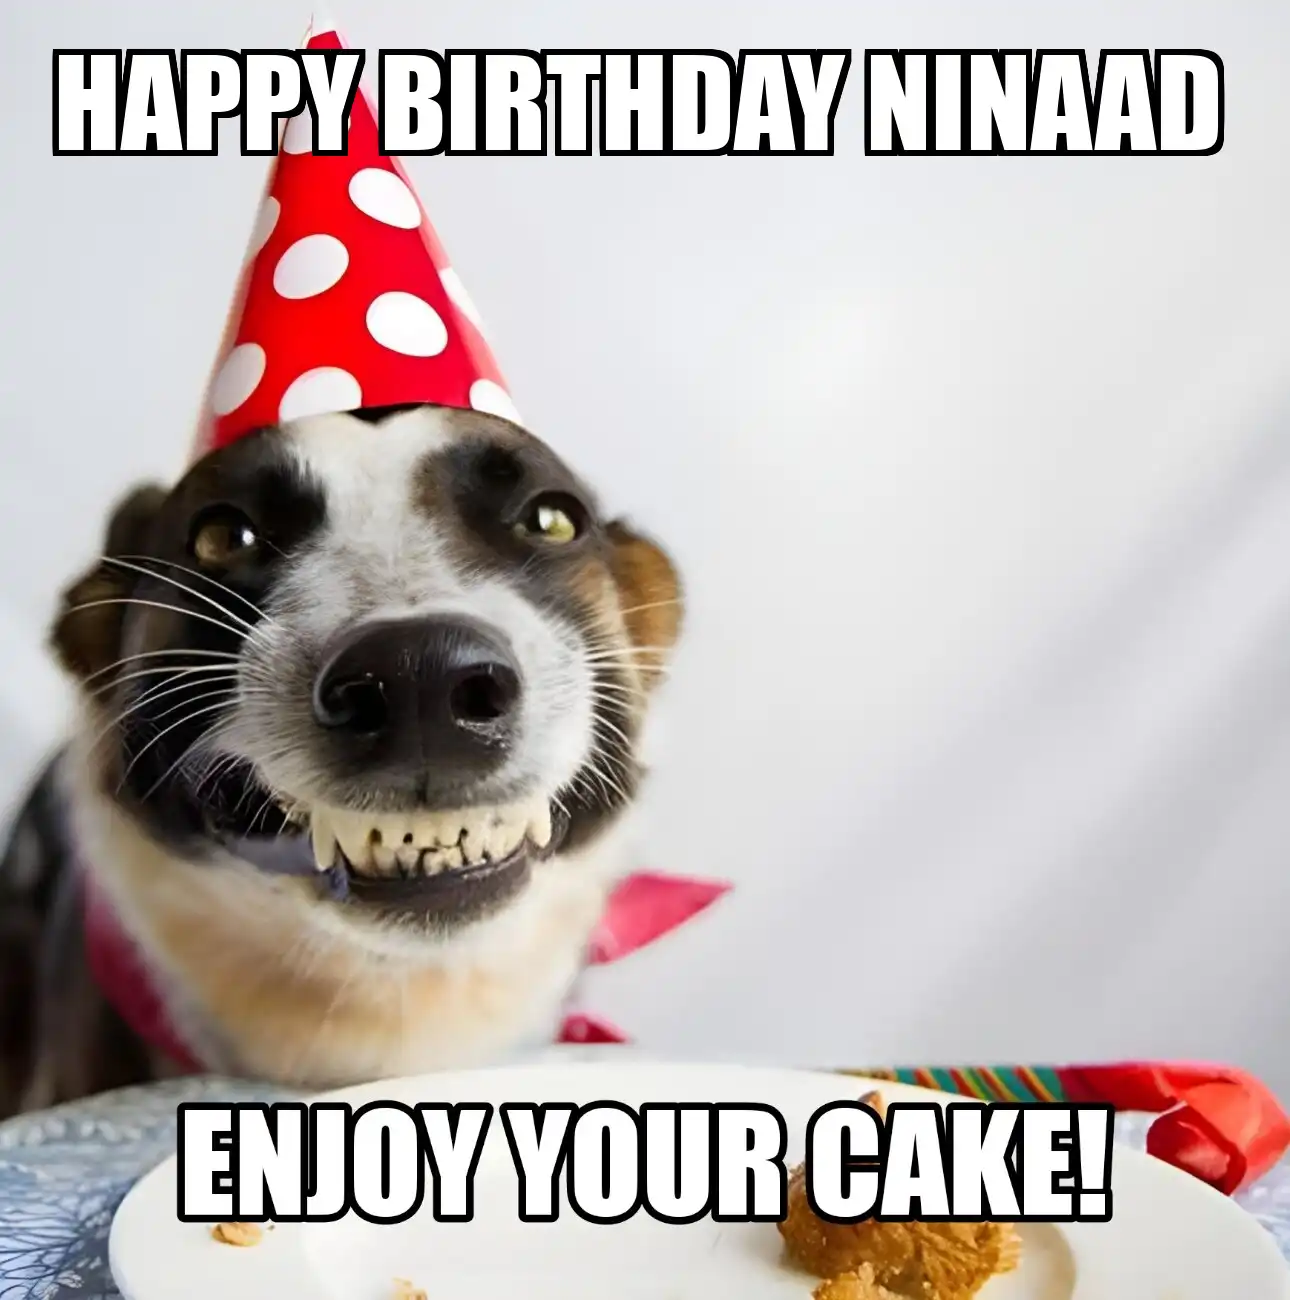 Happy Birthday Ninaad Enjoy Your Cake Dog Meme